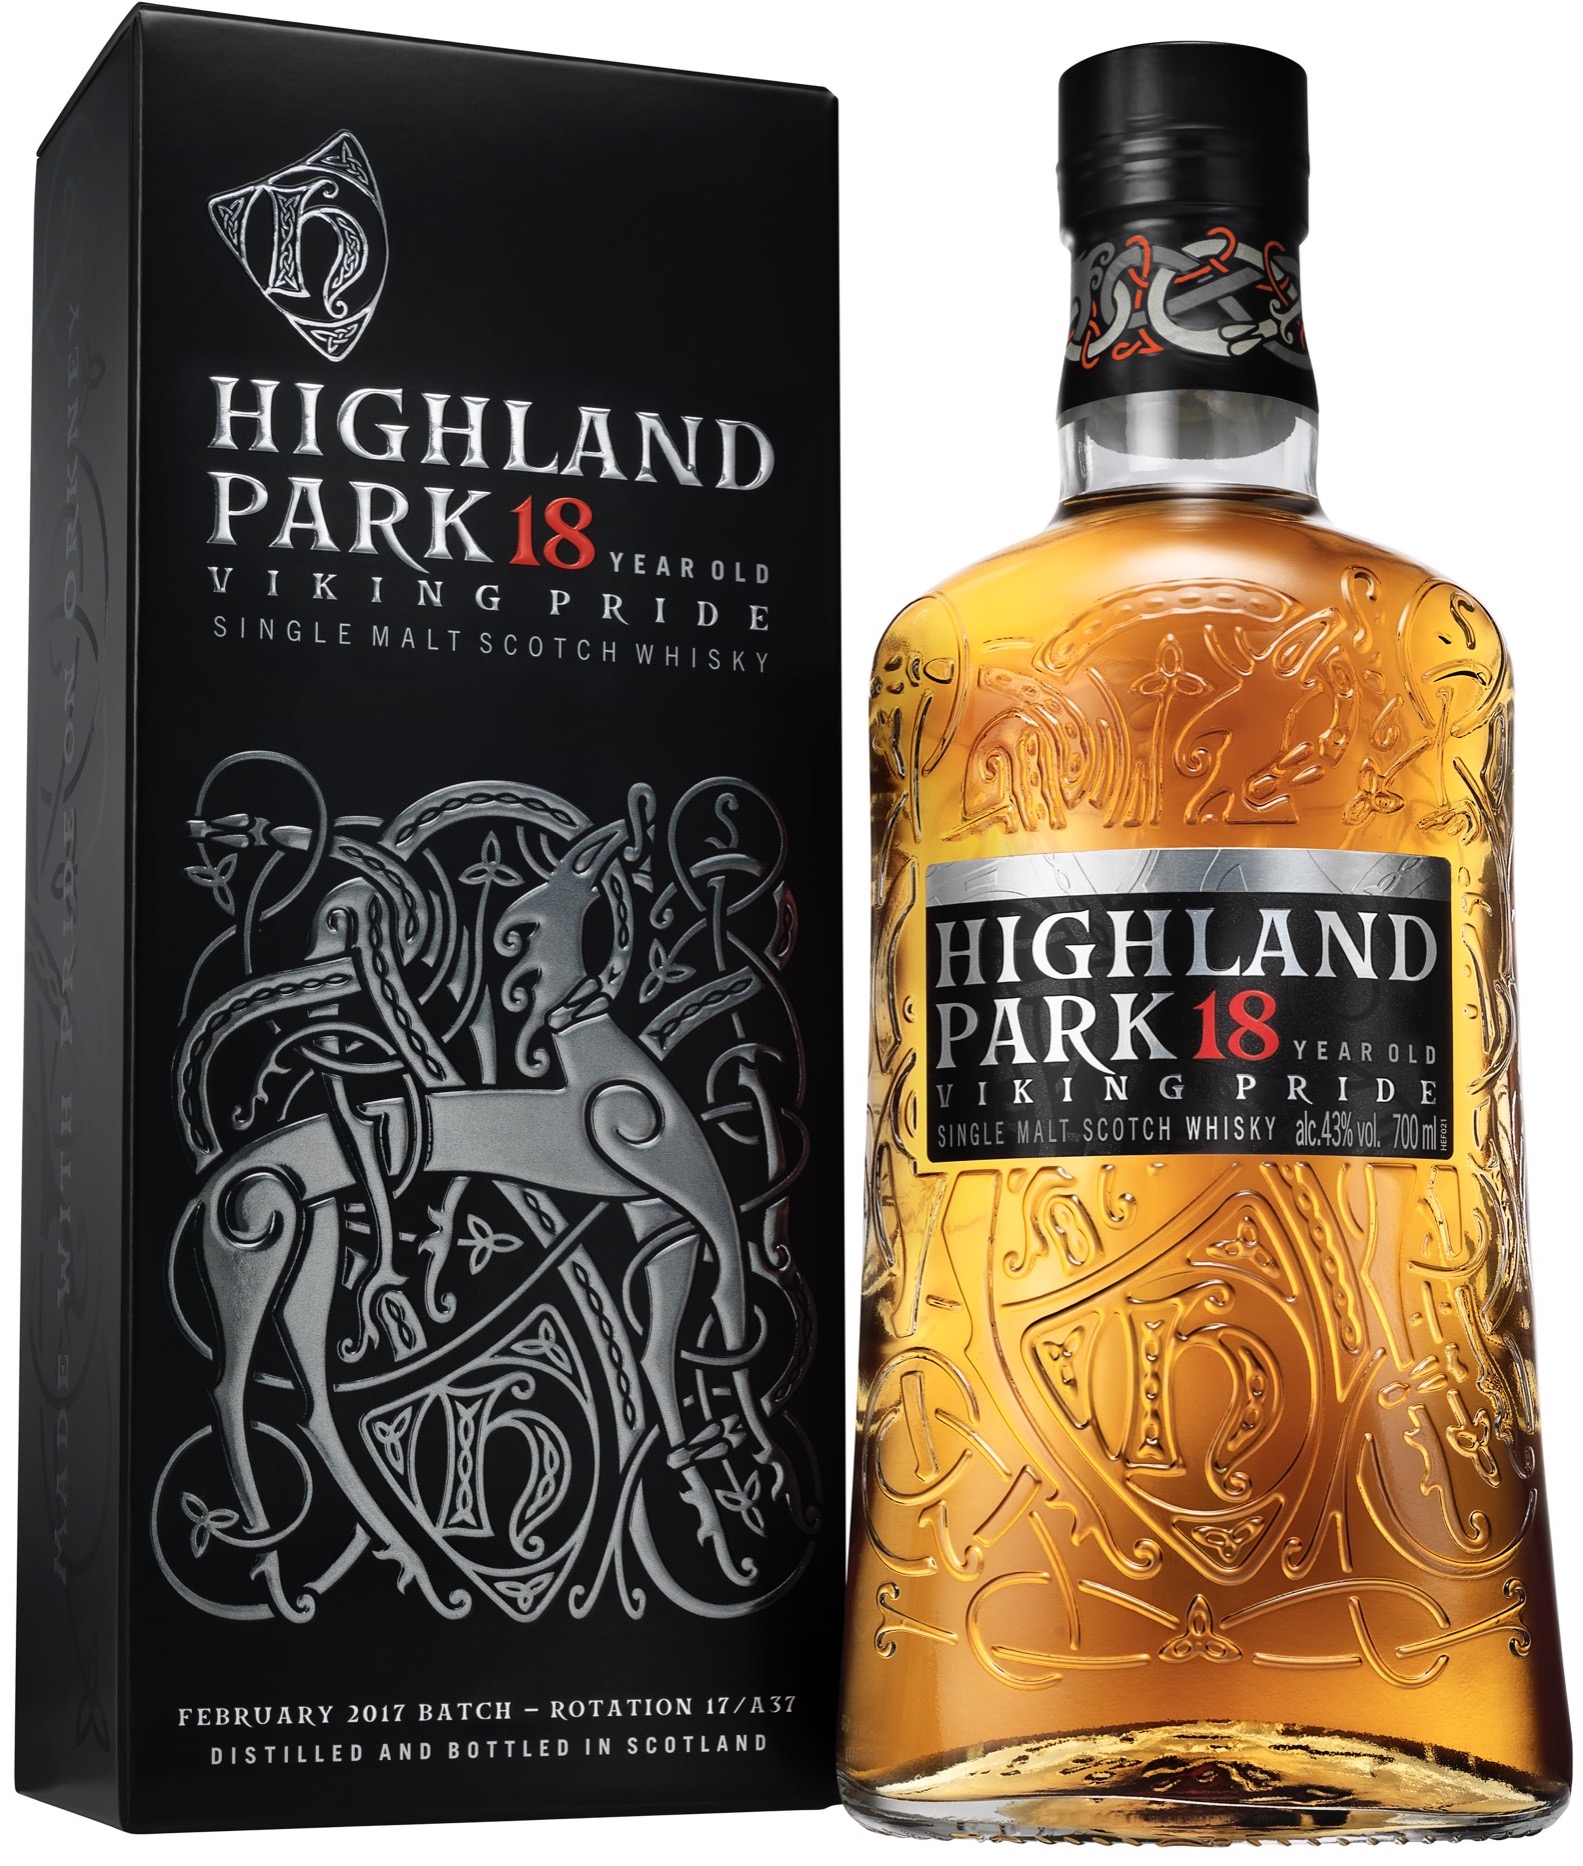 Highland Park 18 Jahre Viking Pride Single Malt Scotch Whisky in GP43 % 0,7 l